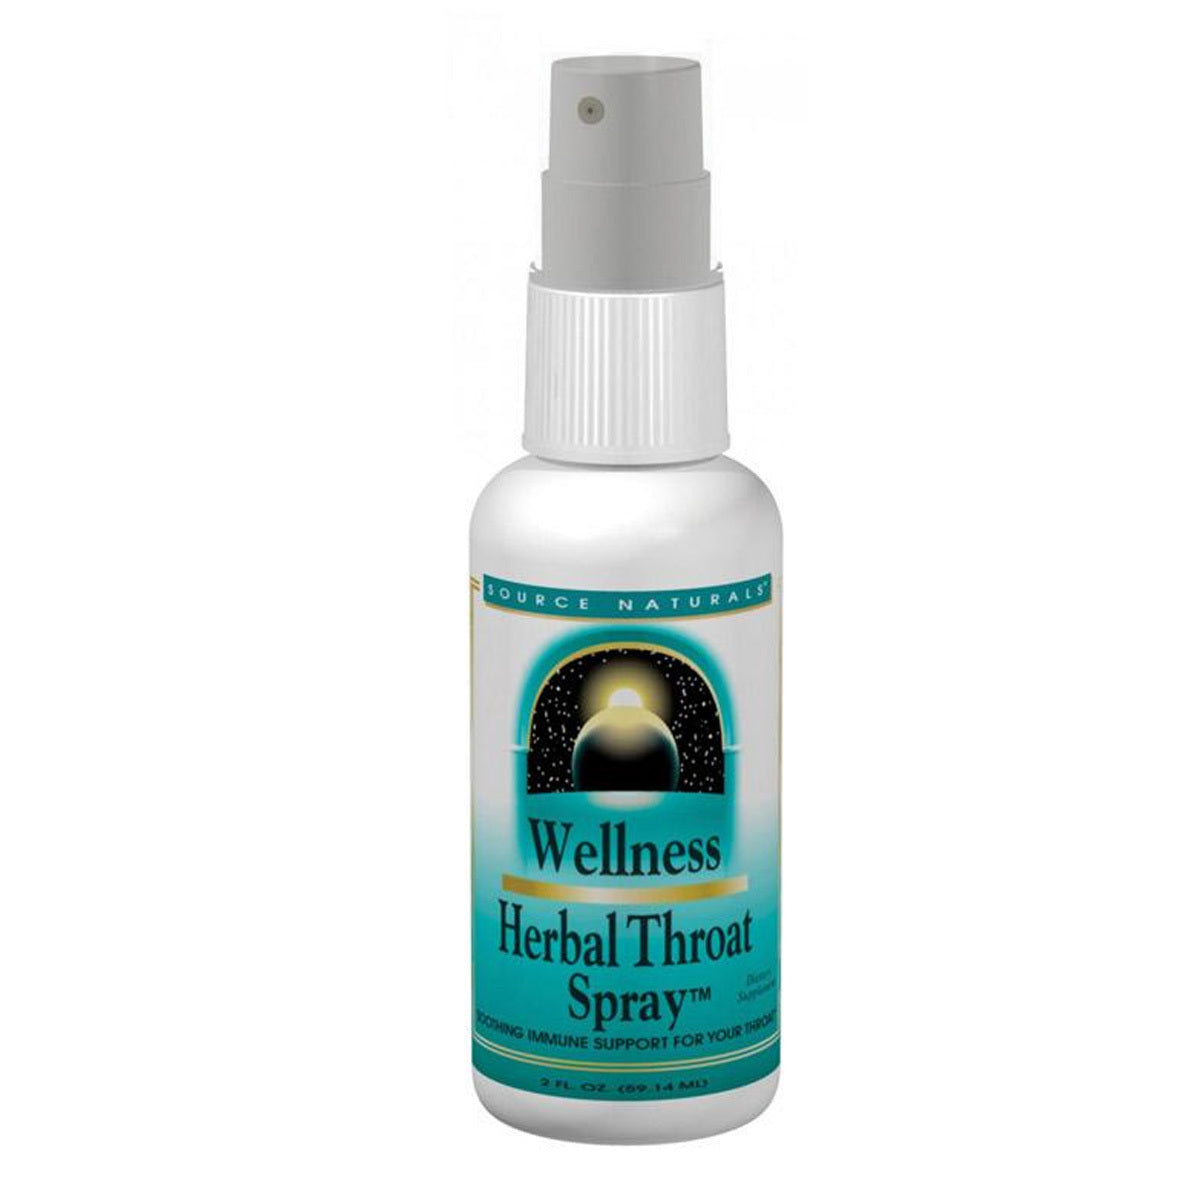 Primary image of Wellness Herbal Throat Spray